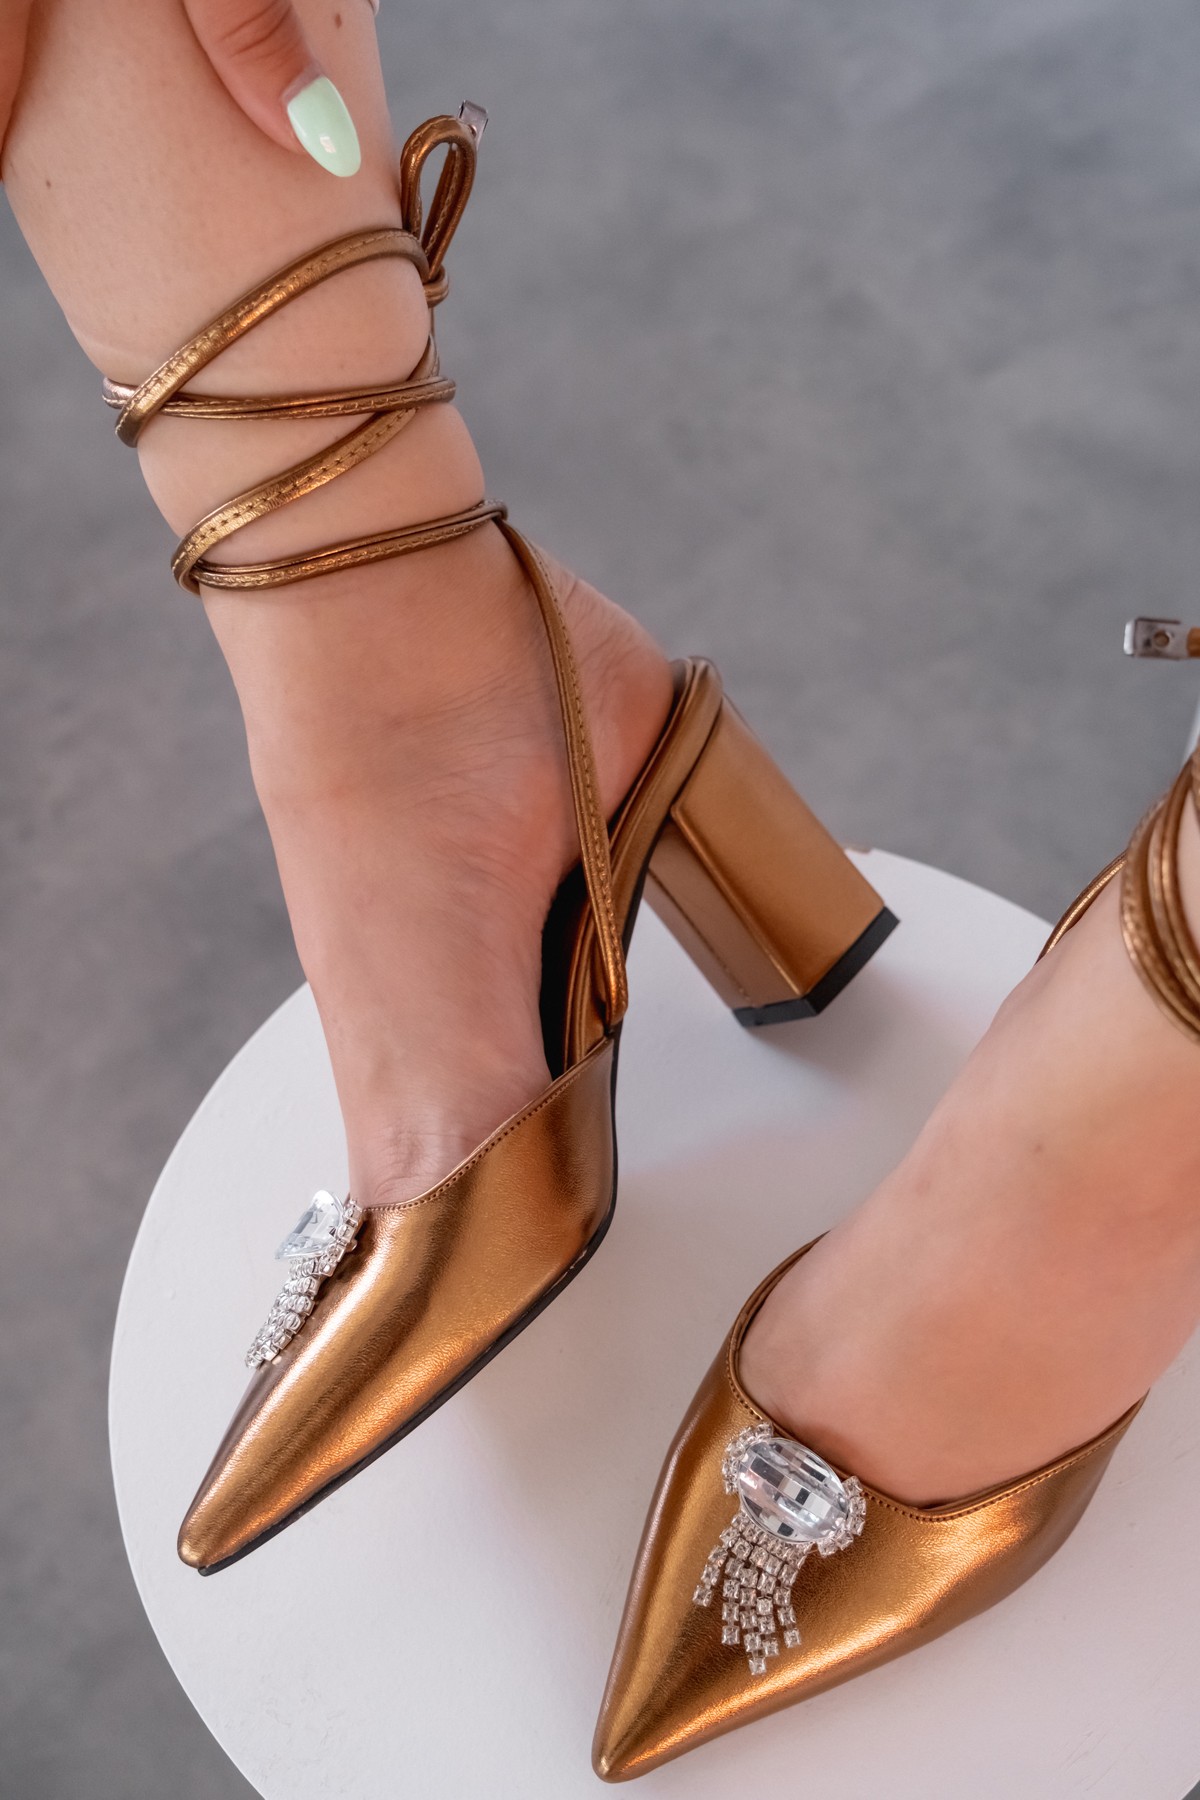 Teldina bright satin leather high heeled stiletto bronze